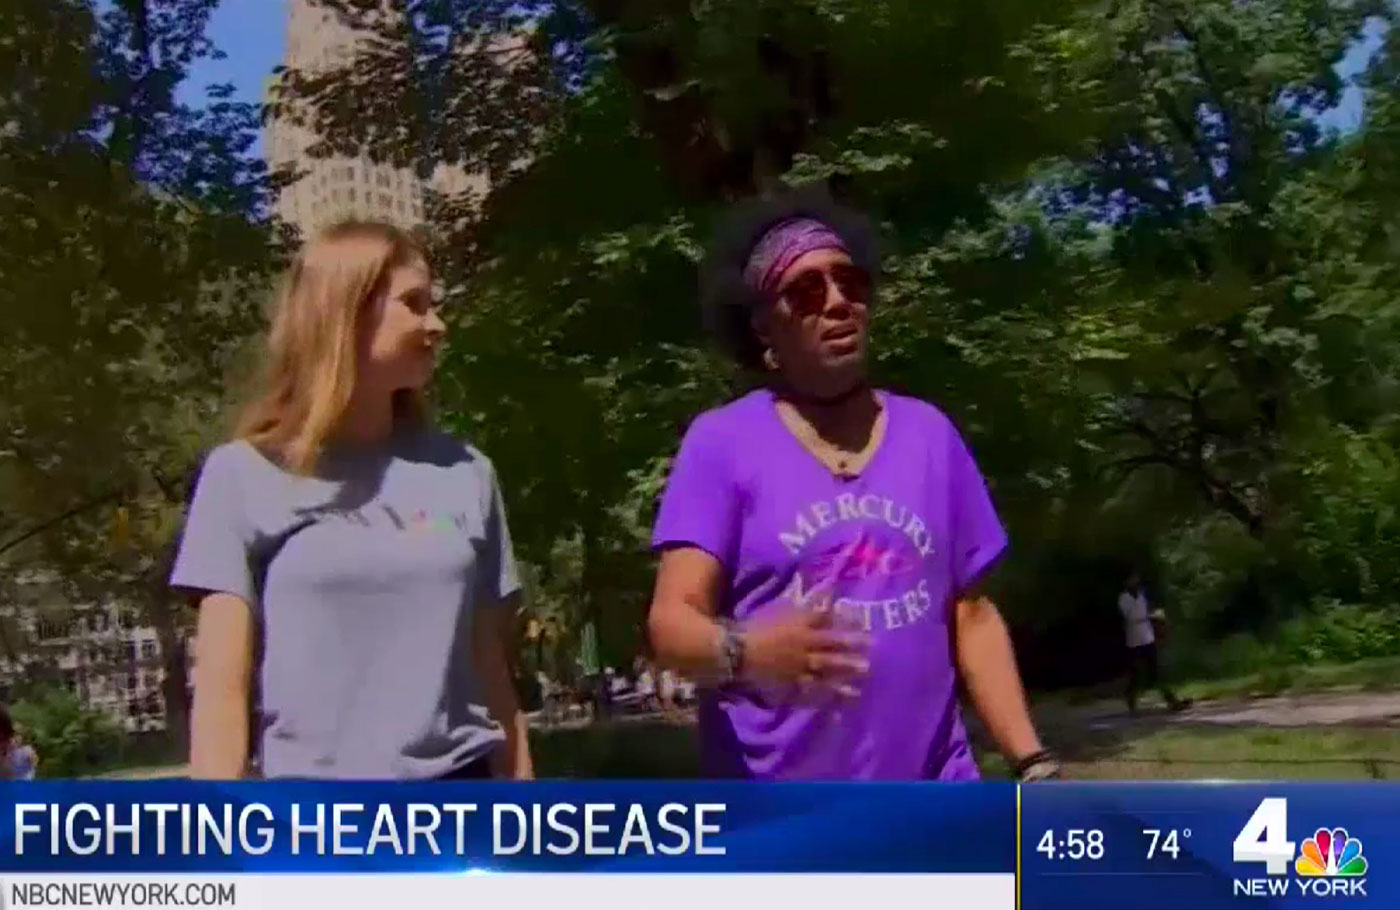 Women Over 50 Fighting Heart Disease by Running